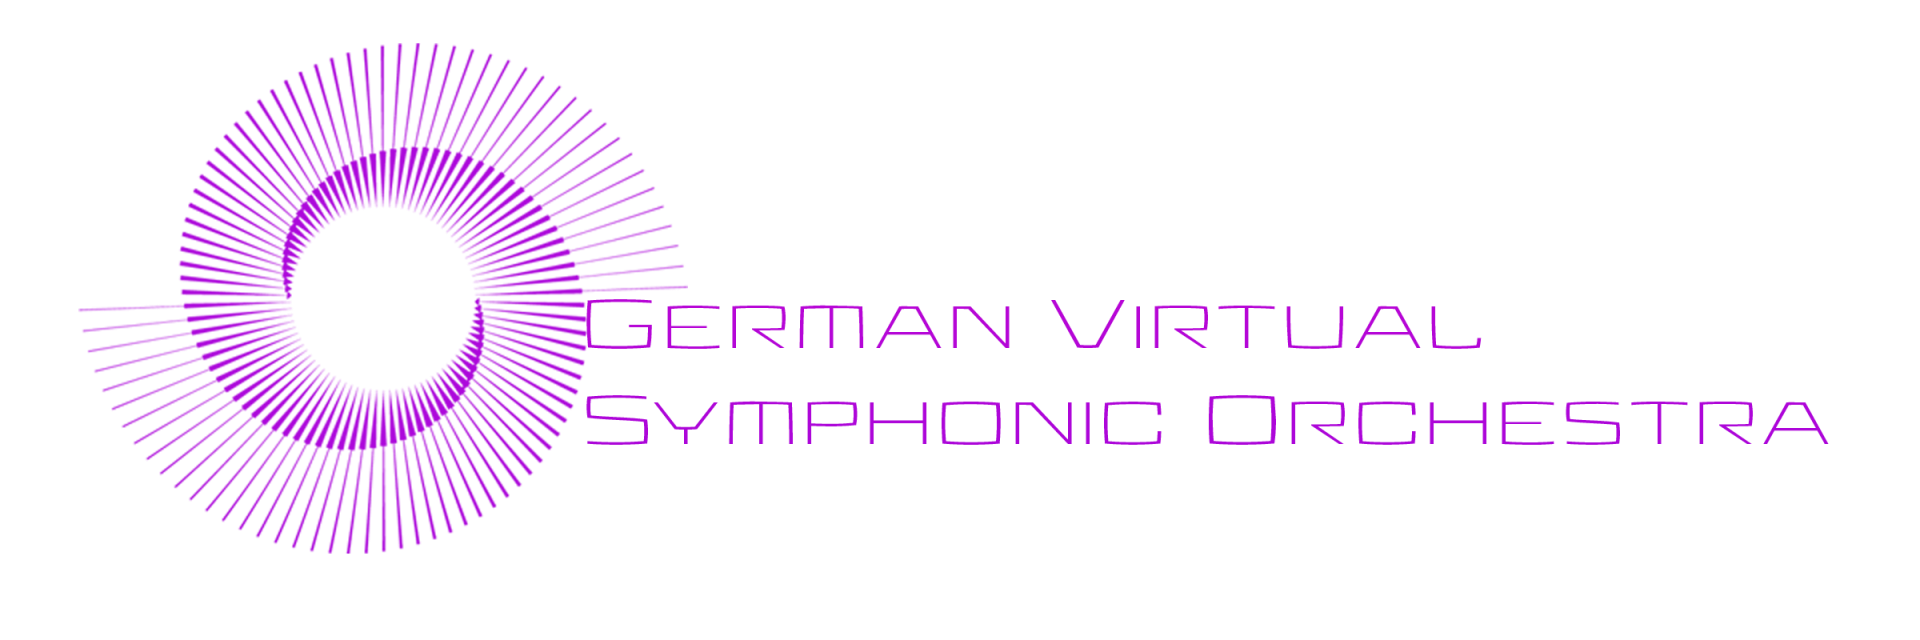 GVSO - German Virtual Symphonic Orchestra